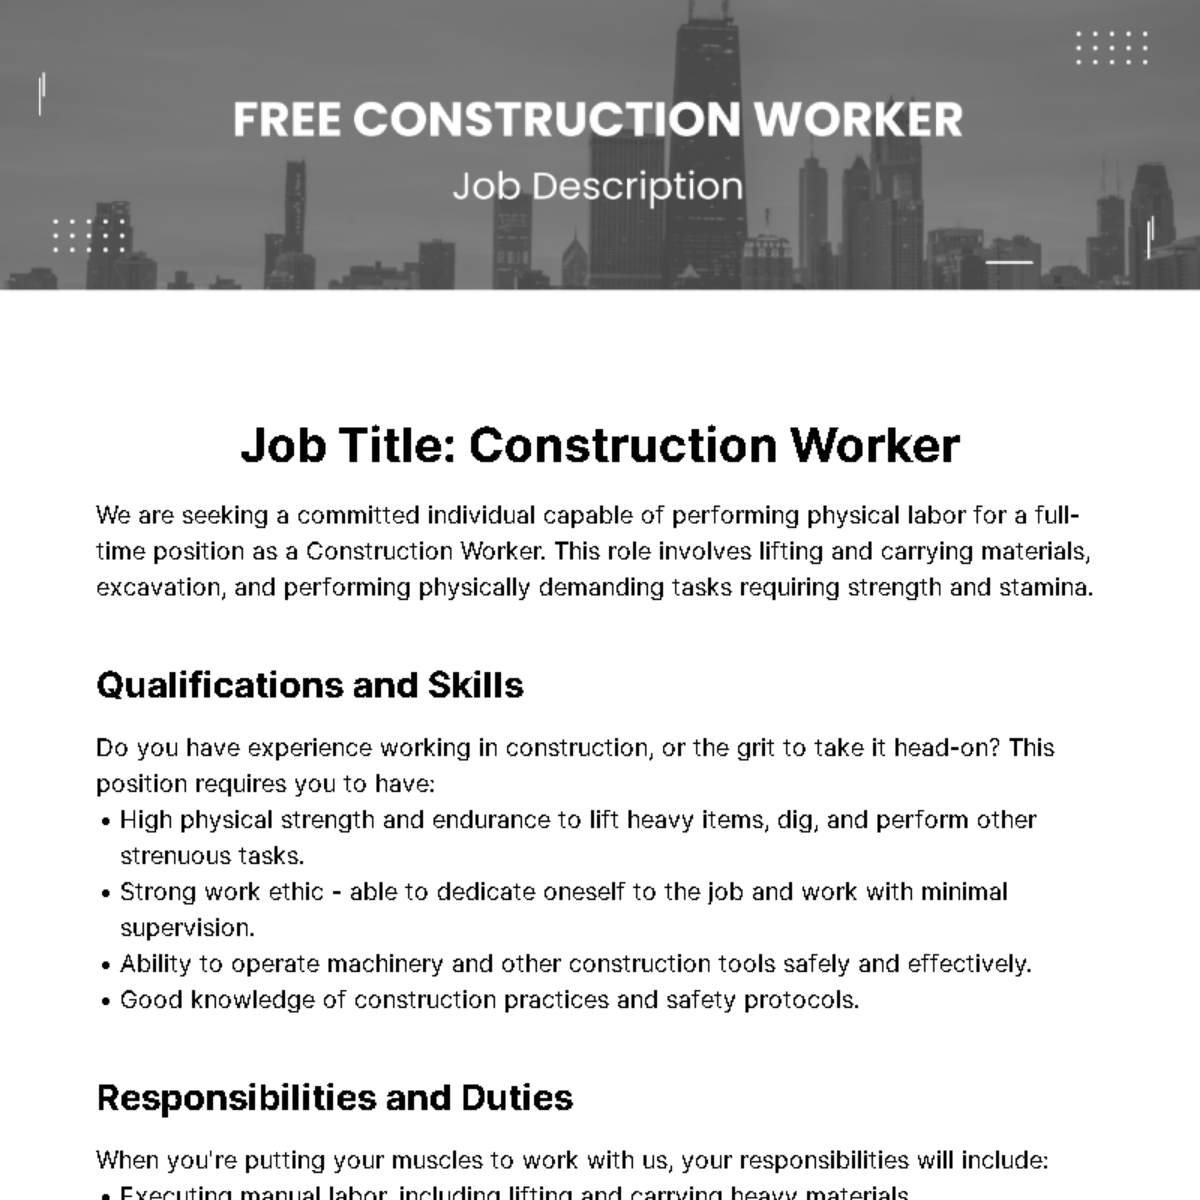 Construction Worker Job Description Template